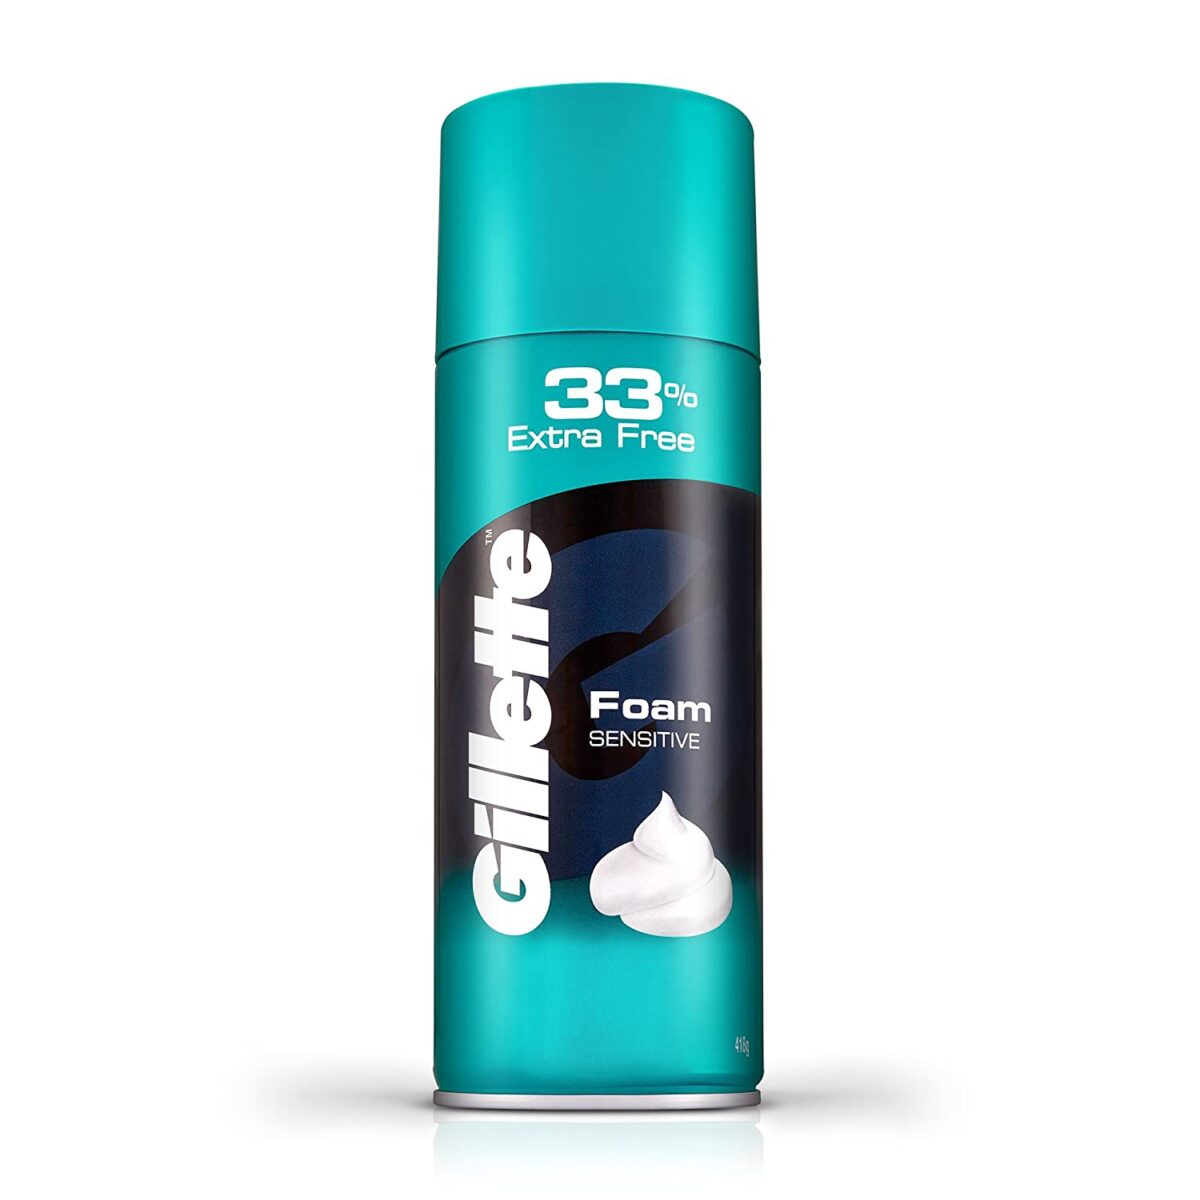 Gillette Classic Sensitive Shave Foam – 418 g (33% extra)